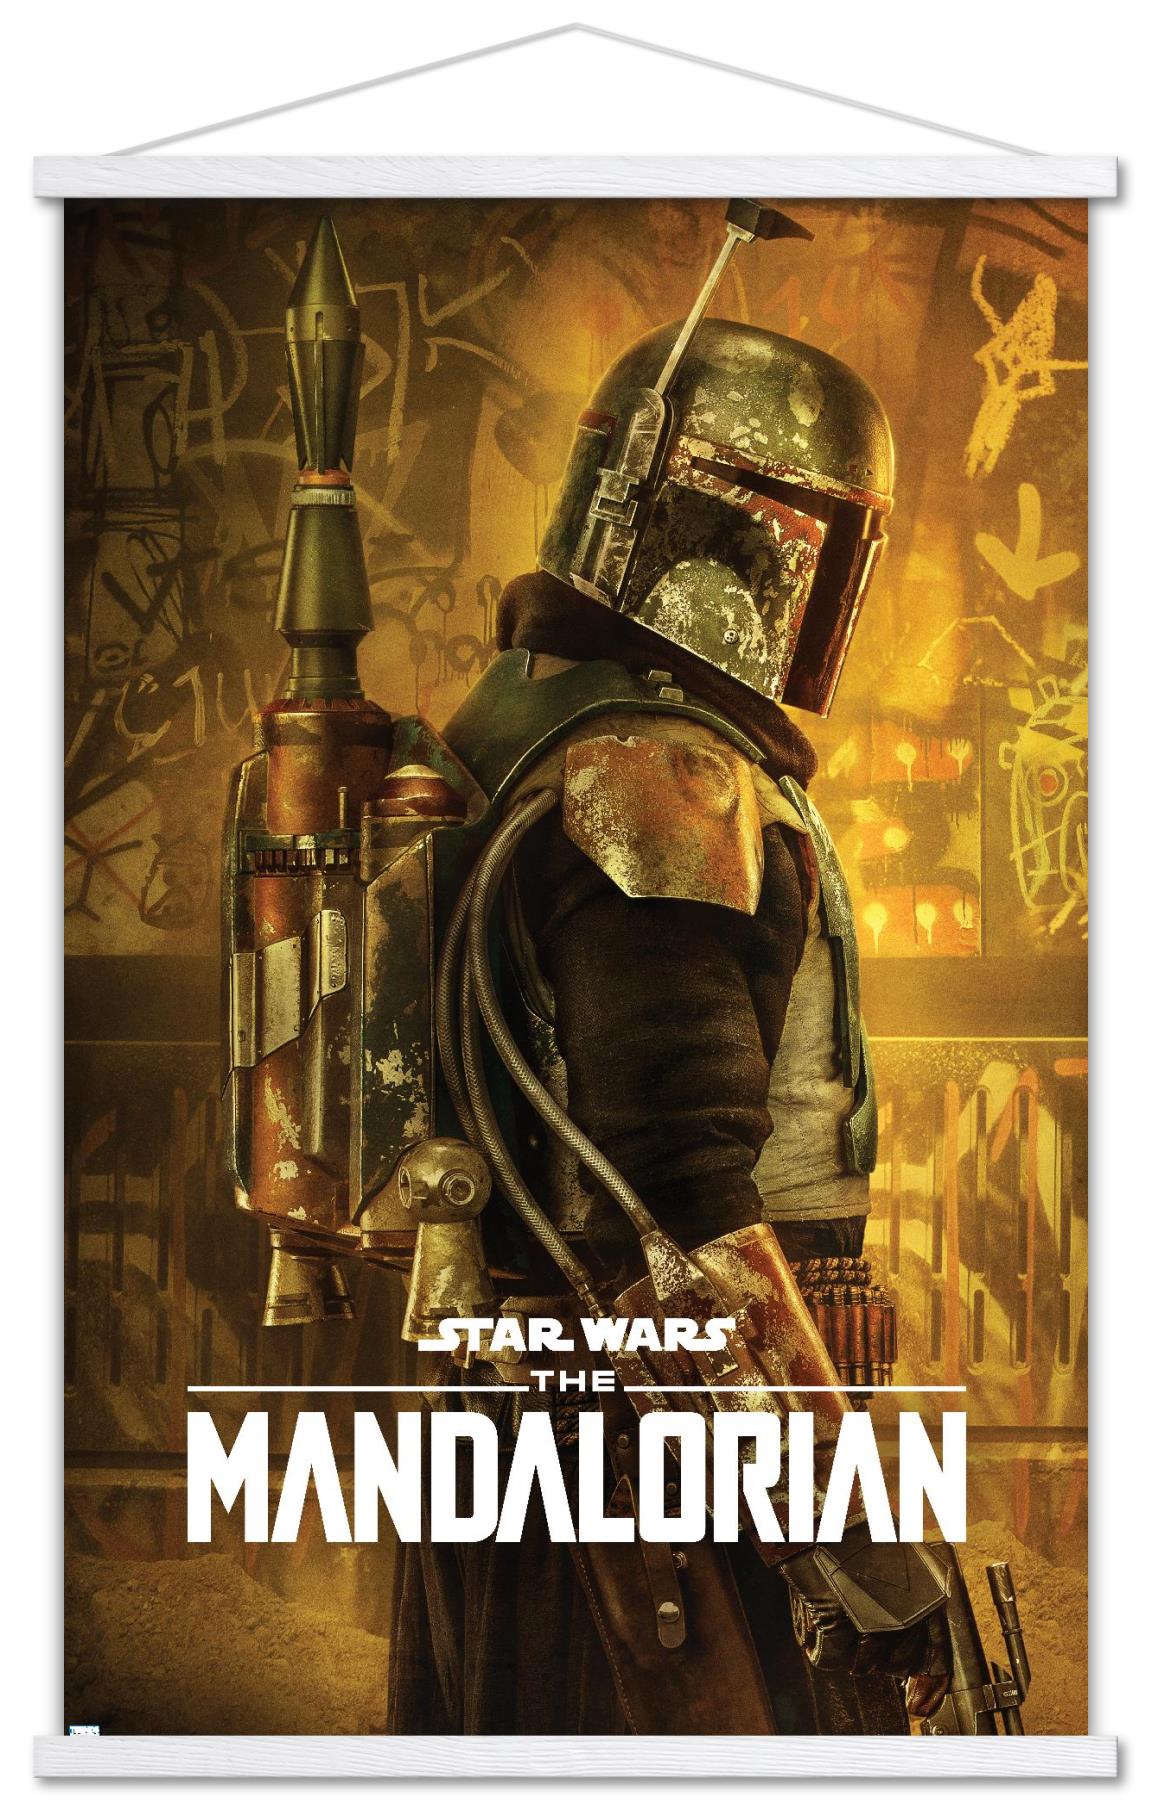 Star Wars: The Mandalorian Season 2 - Boba Fett 24" x 40" Poster by Trends International - image 1 of 3